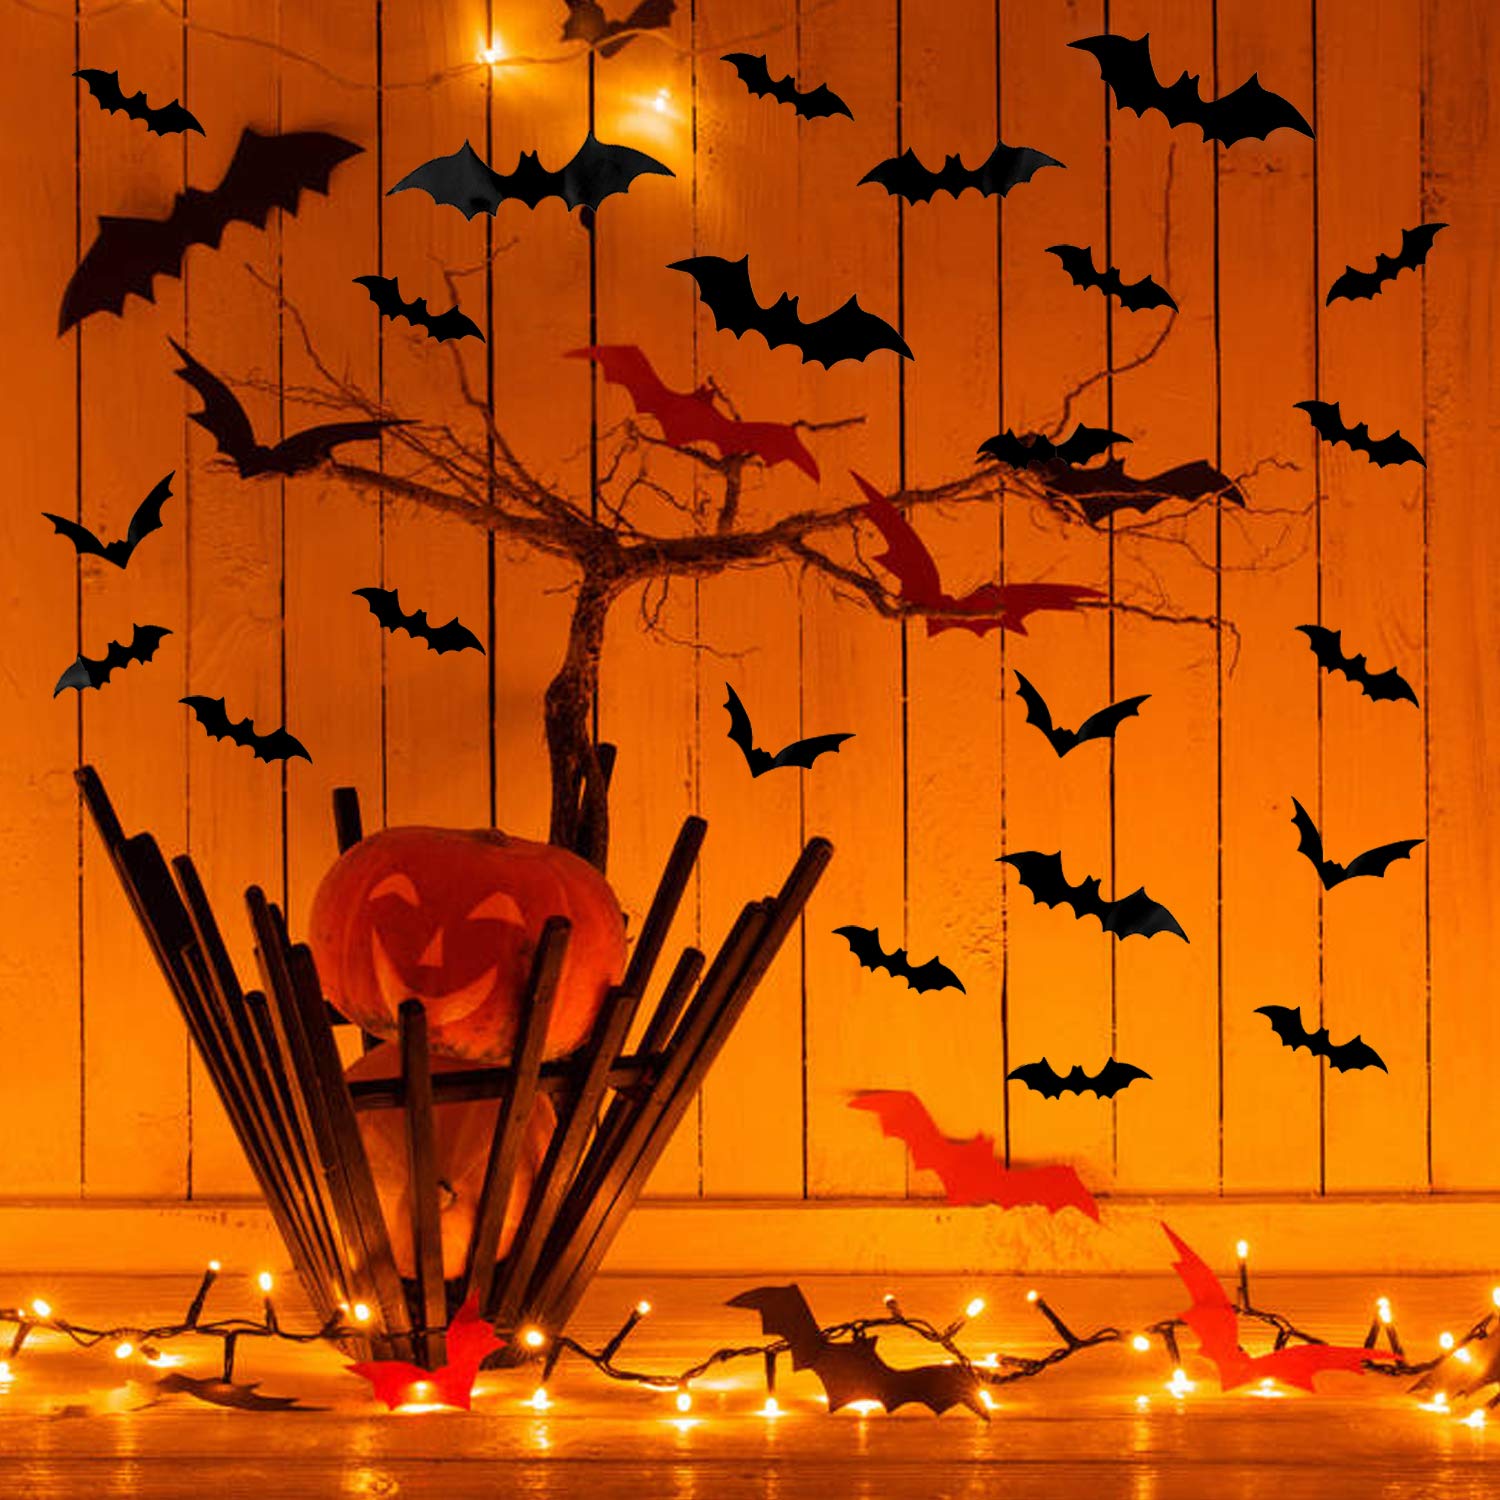 DIYASY Bats Wall Decor,120 Pcs 3D Bat Halloween Decoration Stickers for Home Decor 4 Size Waterproof Black Spooky Bats for Room Decor